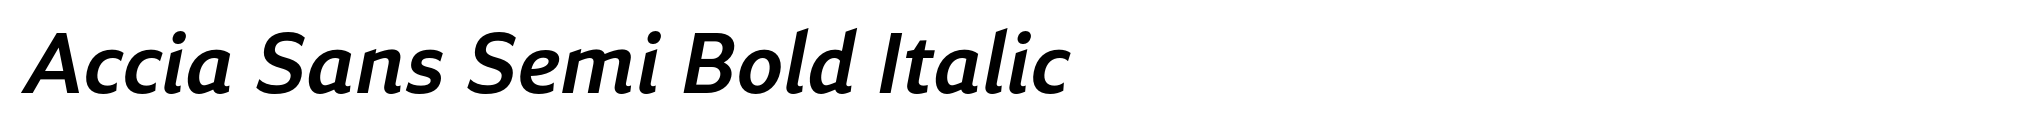 Accia Sans Semi Bold Italic image